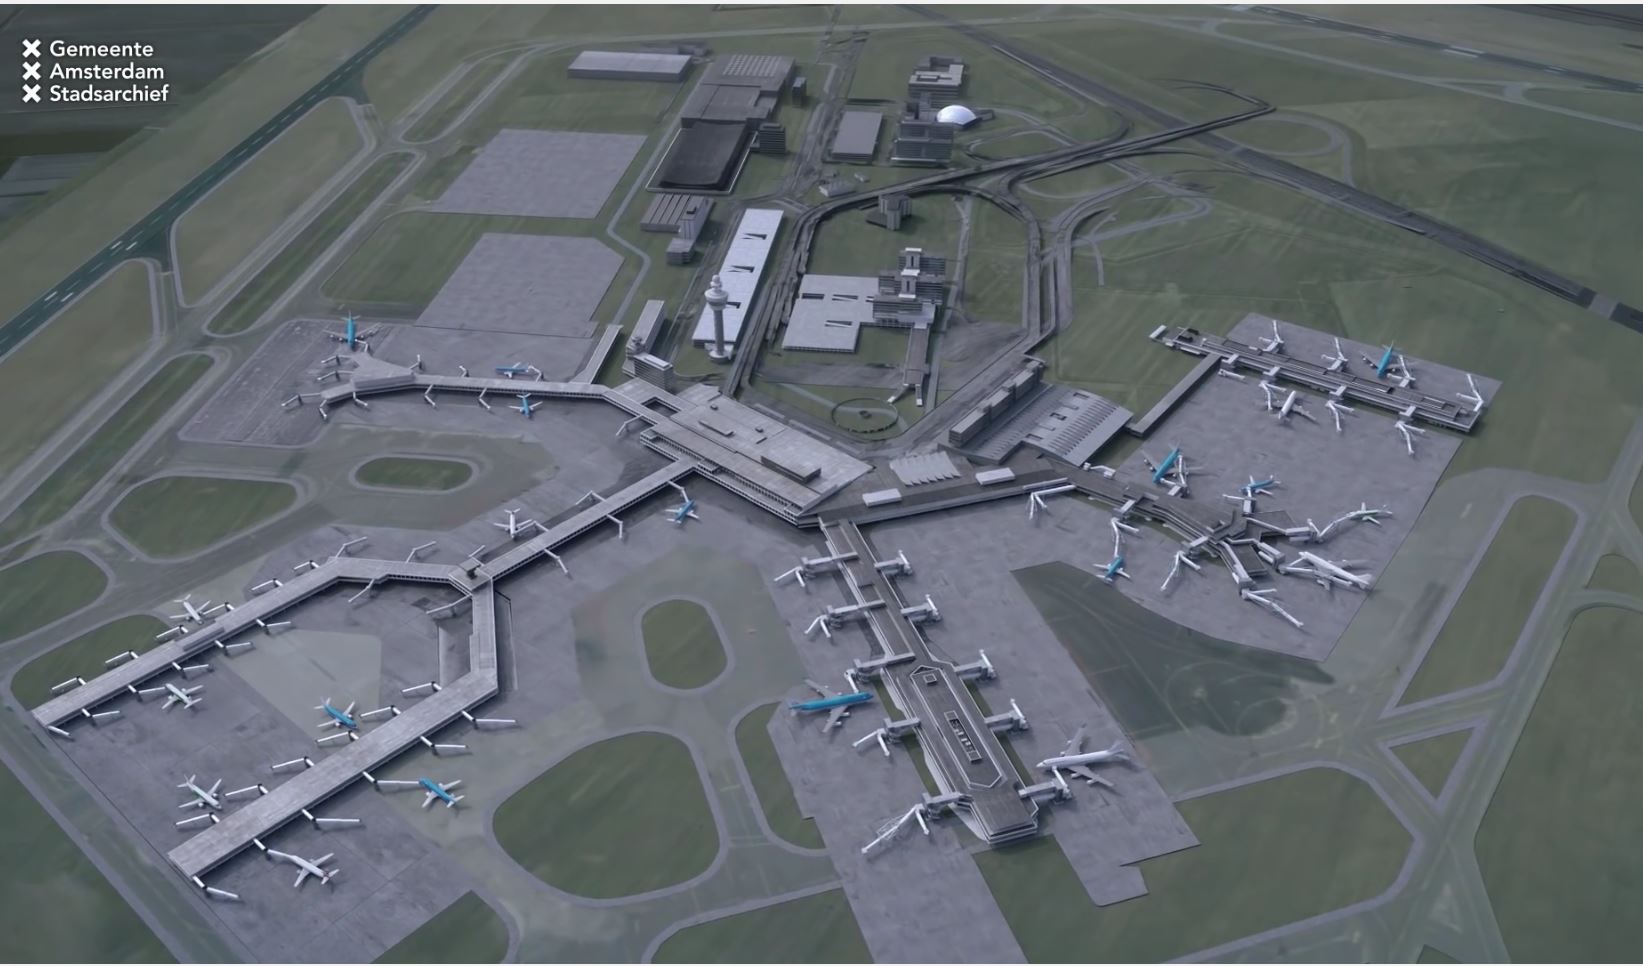 Amsterdam Airport Schiphol 1916 – 2016